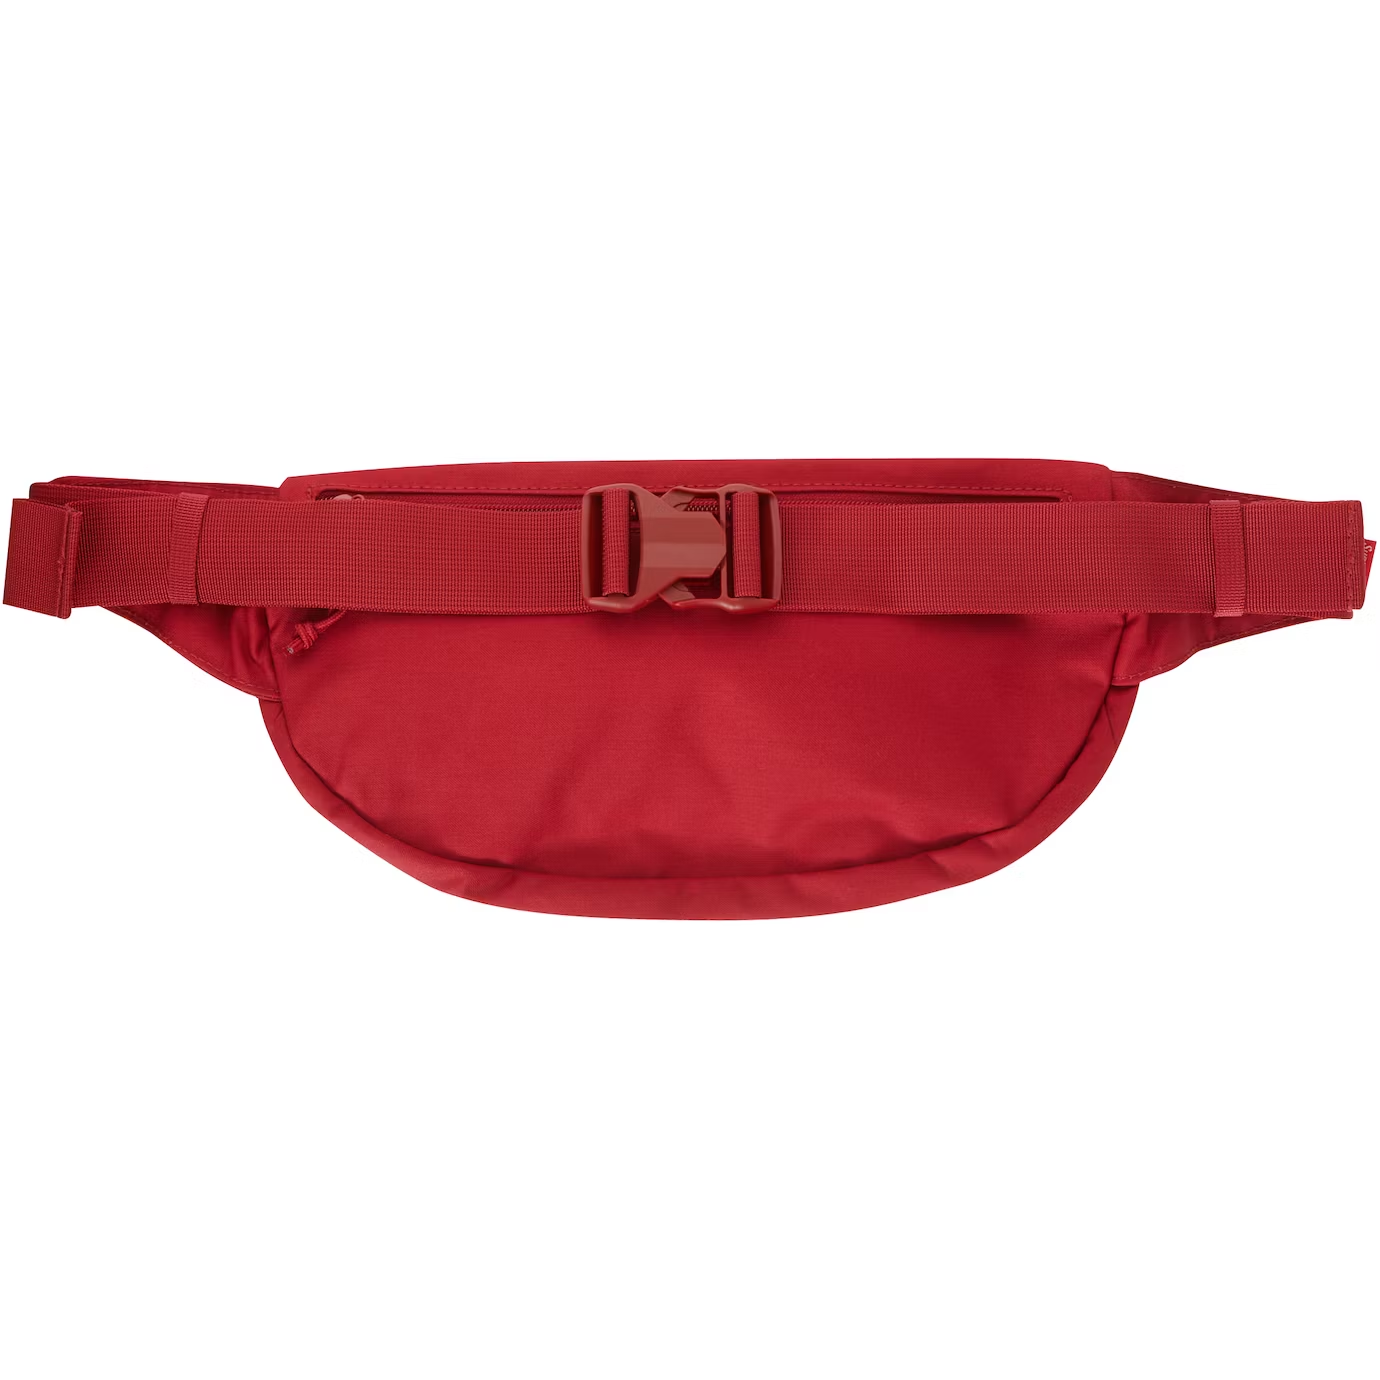 Supreme Field Red Waist Bag